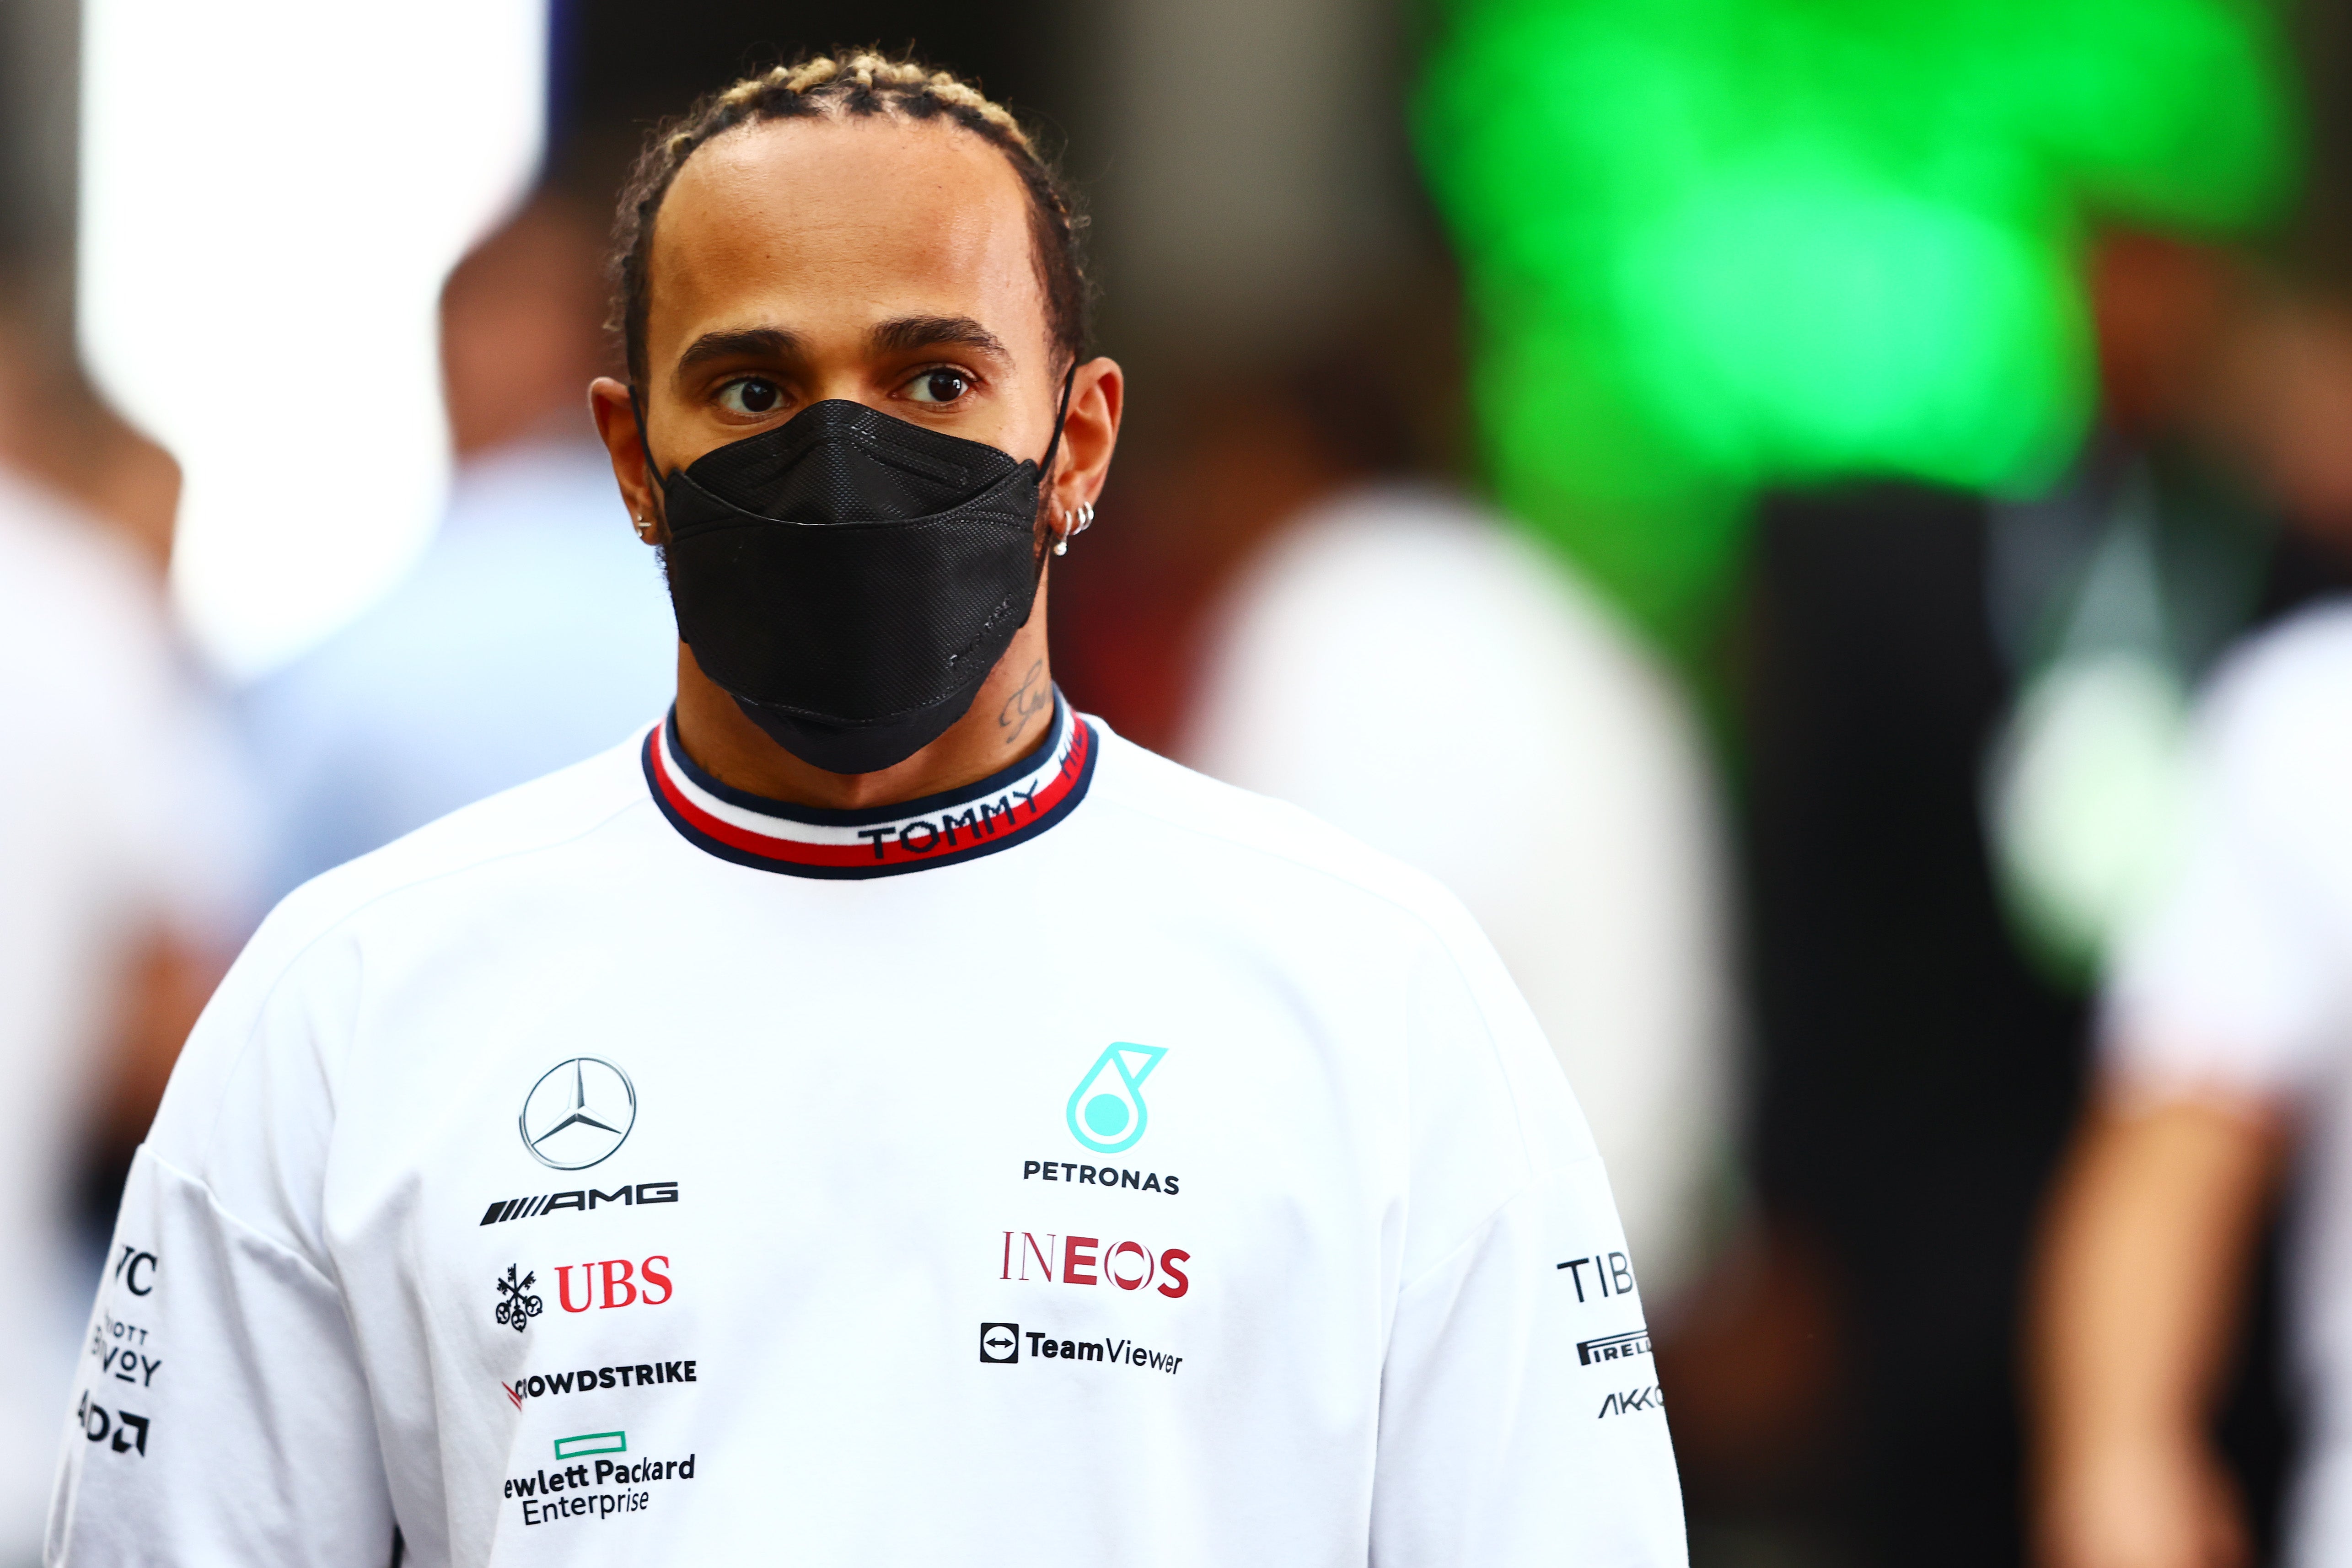 Lewis Hamilton pictured at last week’s Saudi Arabian Grand Prix